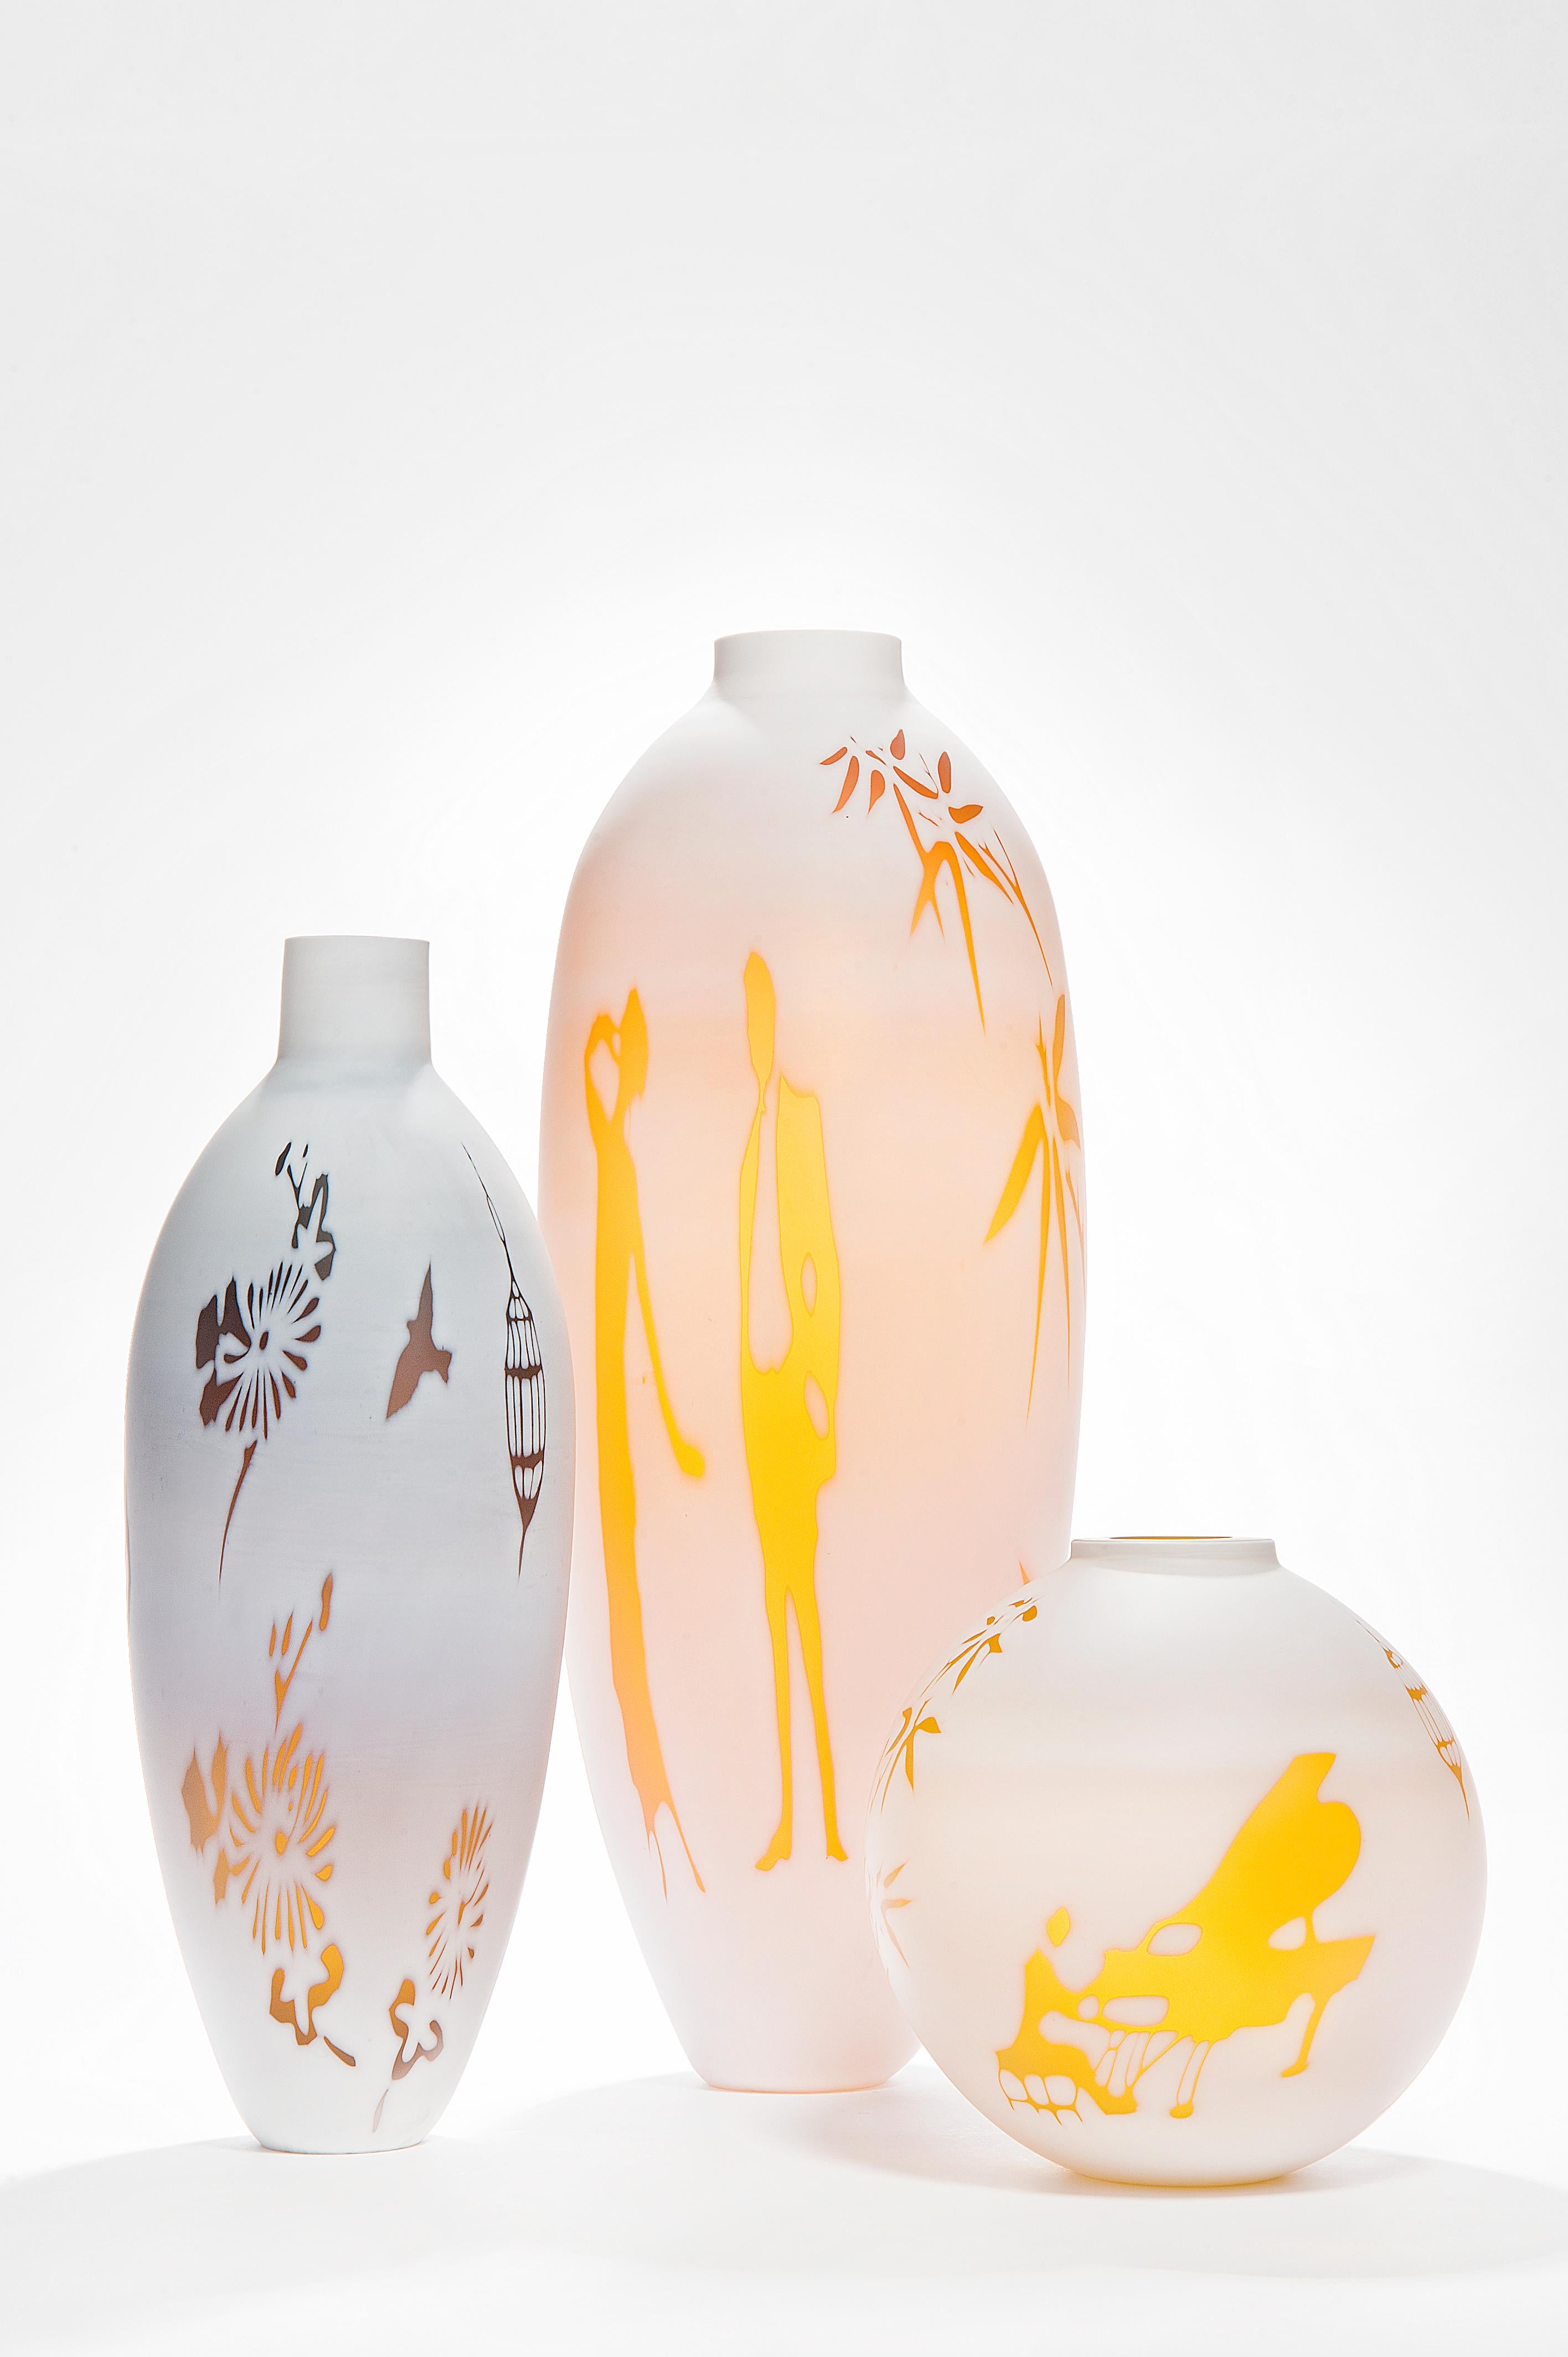 Dorchester Cameo Vase, a glass artwork in alabaster & gold by Sarah Wiberley 4